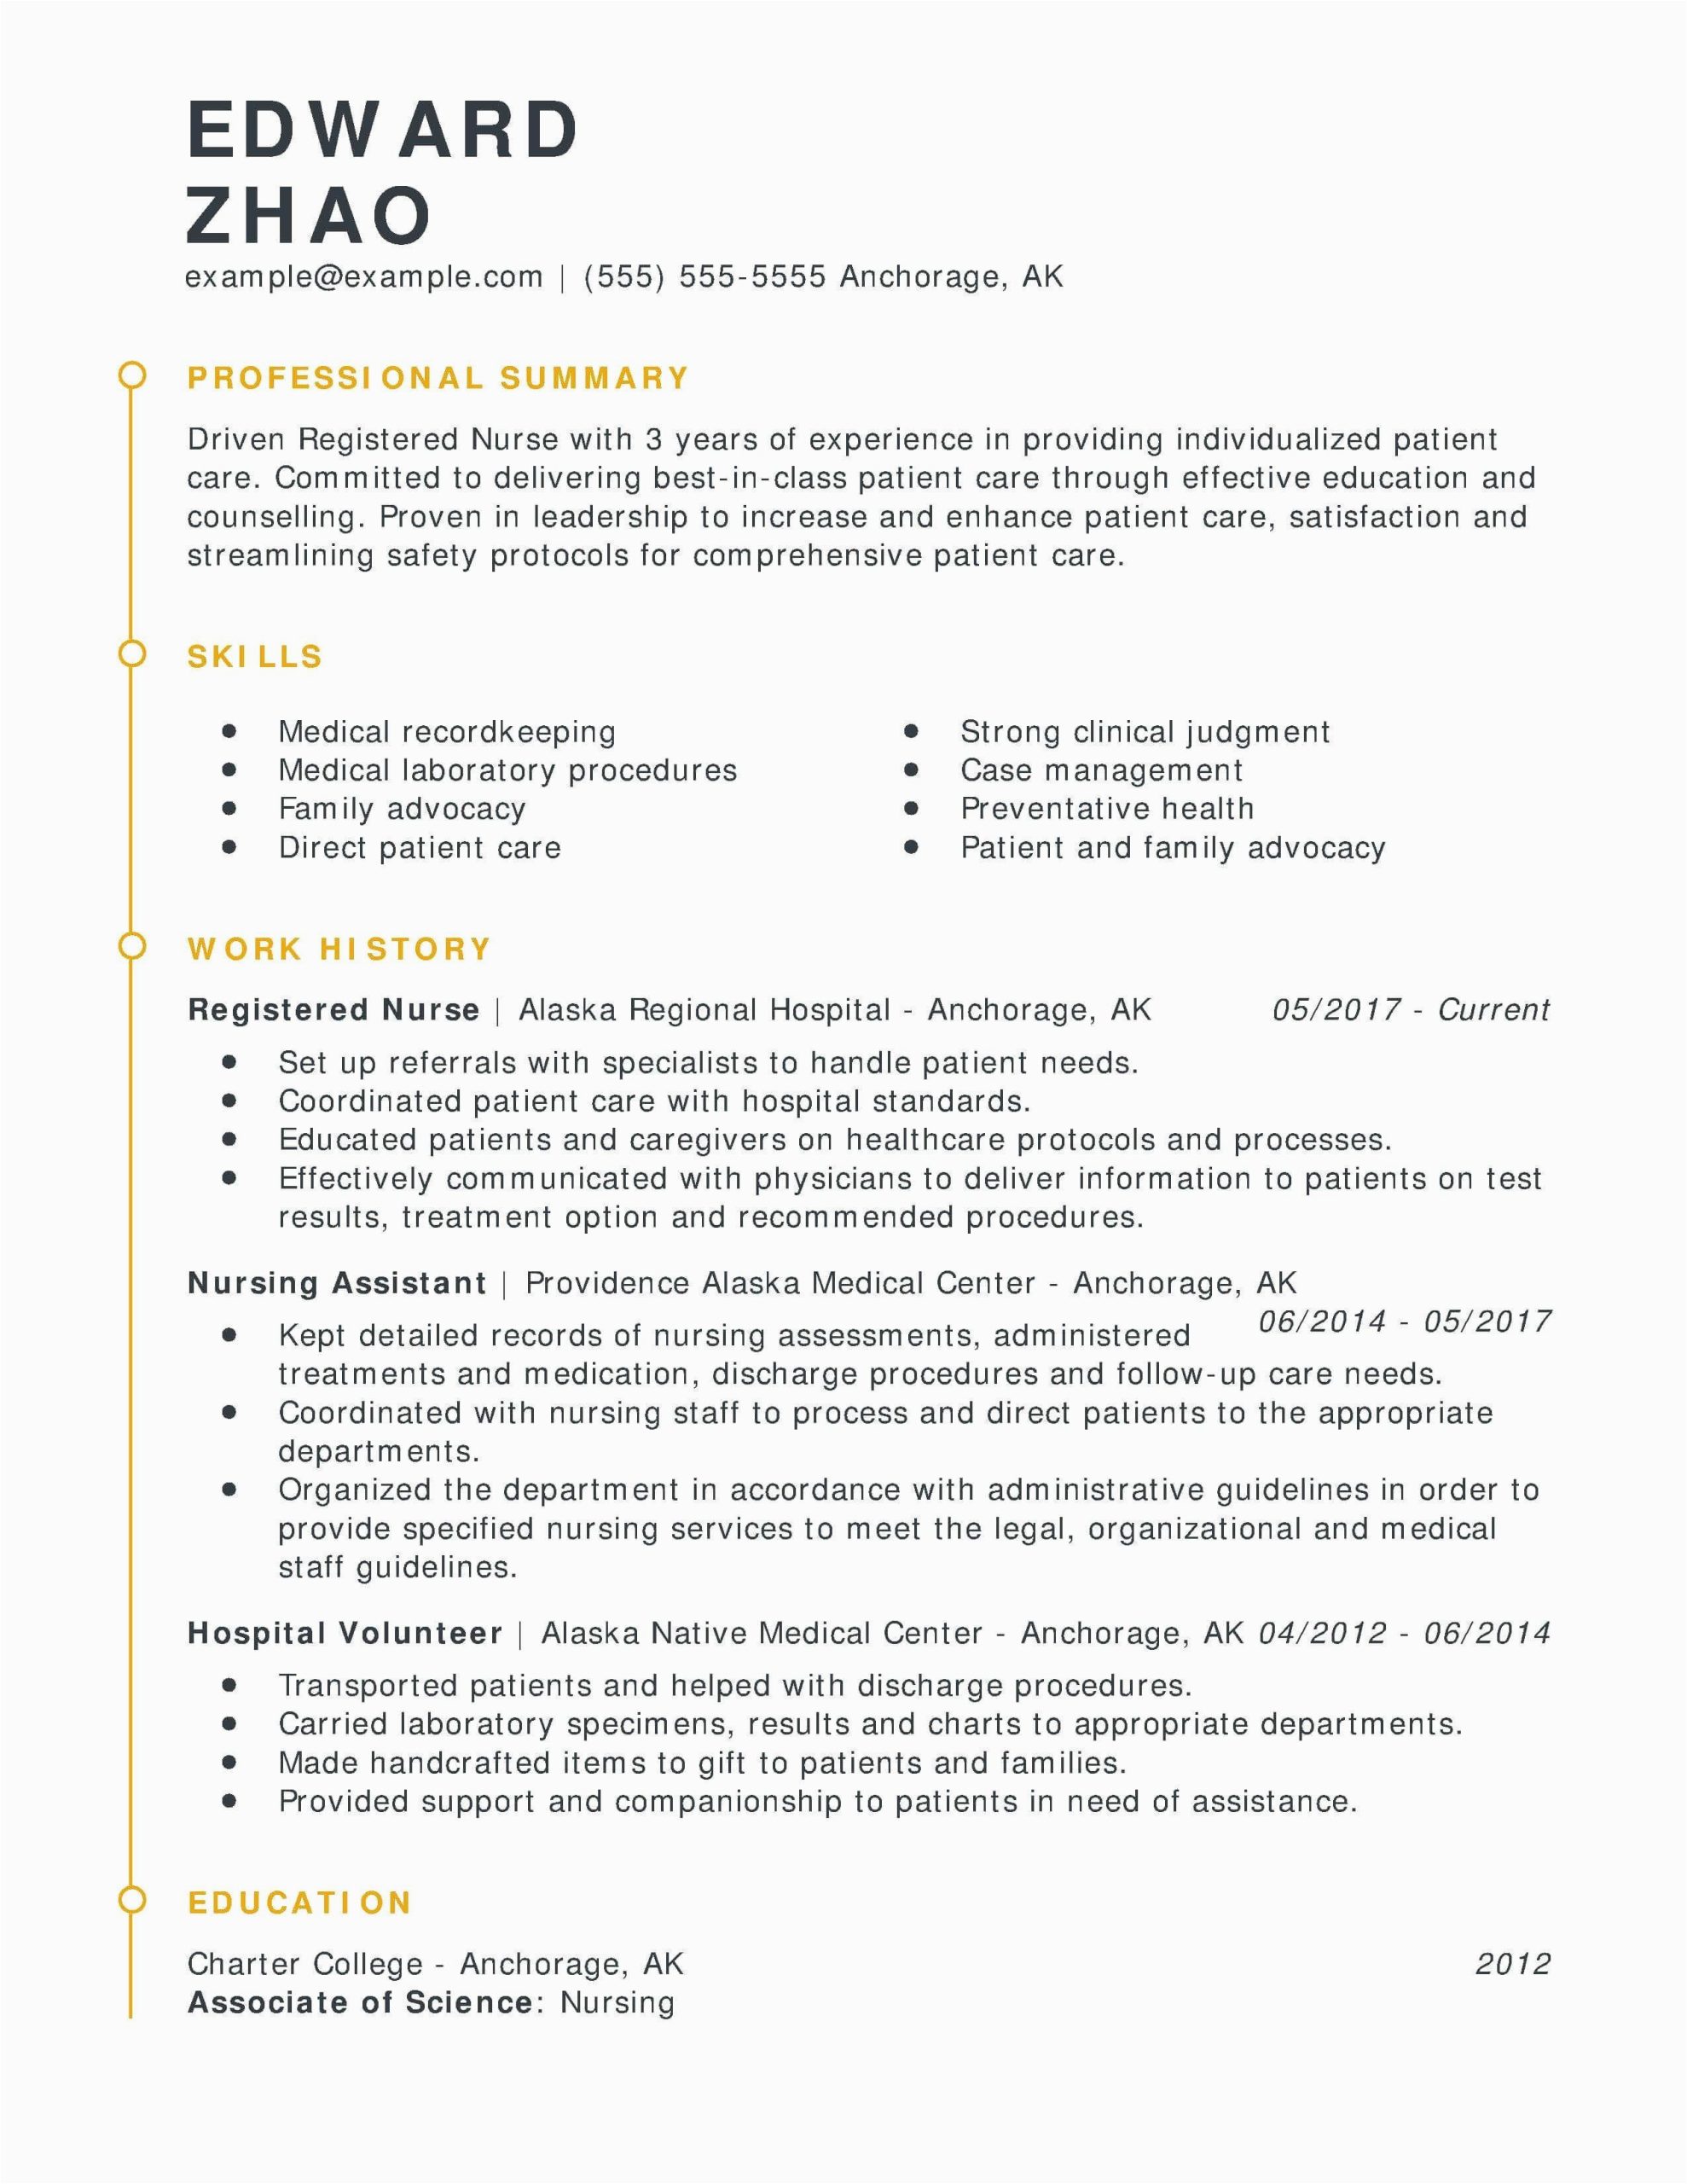 Sample Resume for Company Nurse with Job Description New Grad Nursing Resume Clinical Experience Beautiful for Nursing New